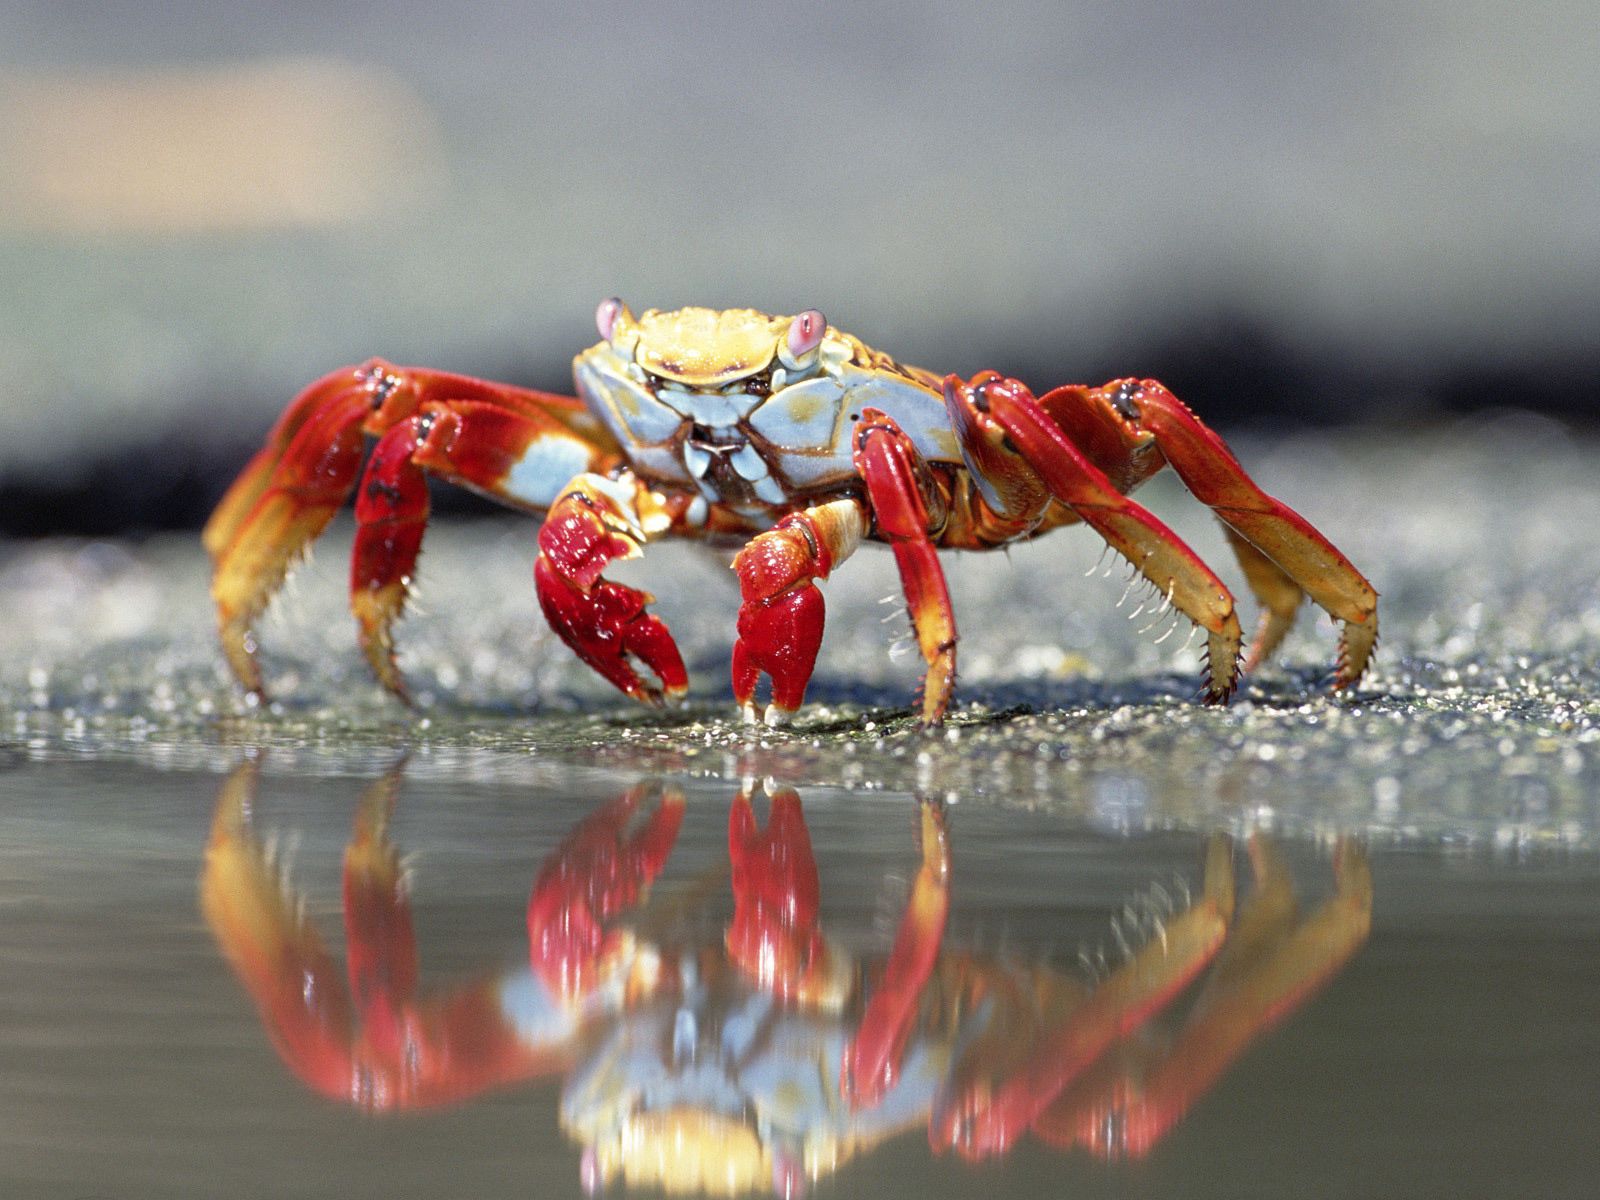 8k Crab Images